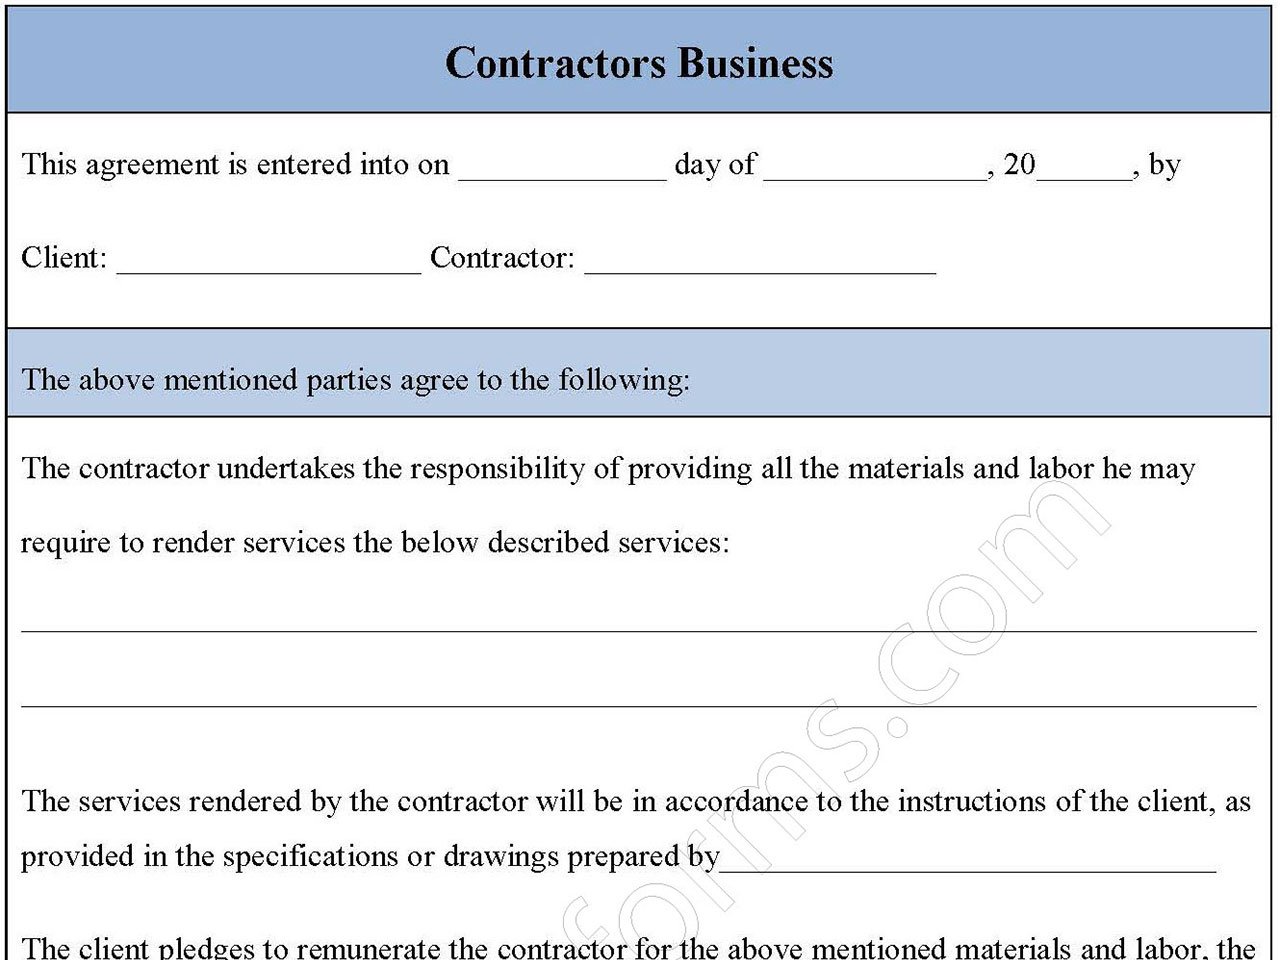 Contractors Business Form